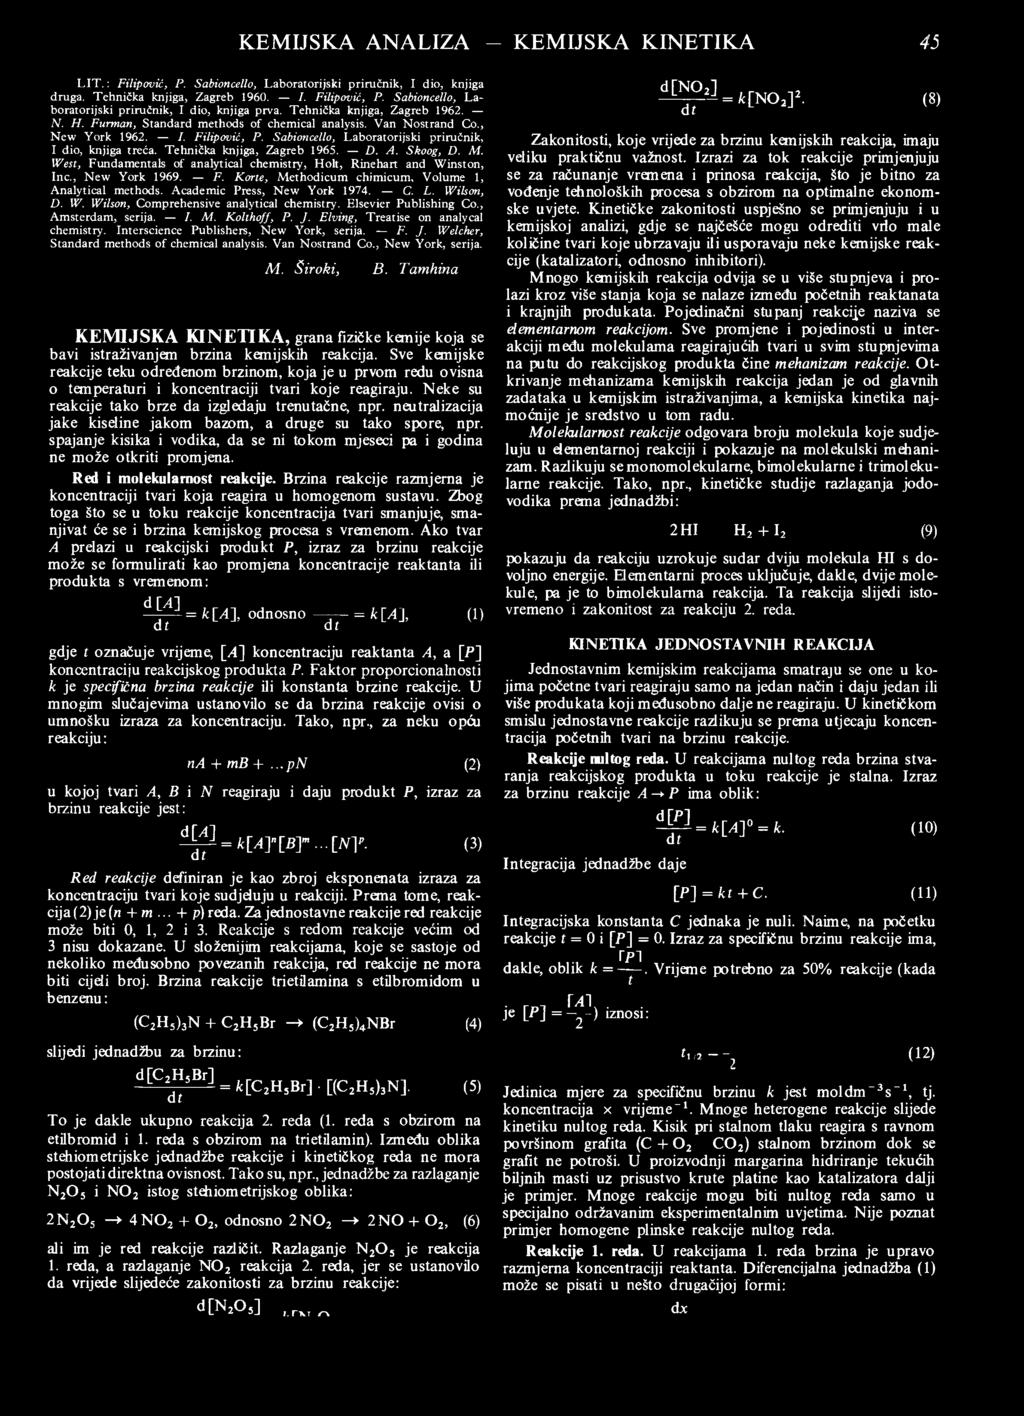 Tehnička knjiga, Zagreb 1965. D. A. Skoog, D. M. West, Fundamentals of analytical chemistry, Holt, Rinehart and Winston, Inc., N ew York 1969. F. Korte, Methodicum chimicum, Volume 1, Analytical methods.